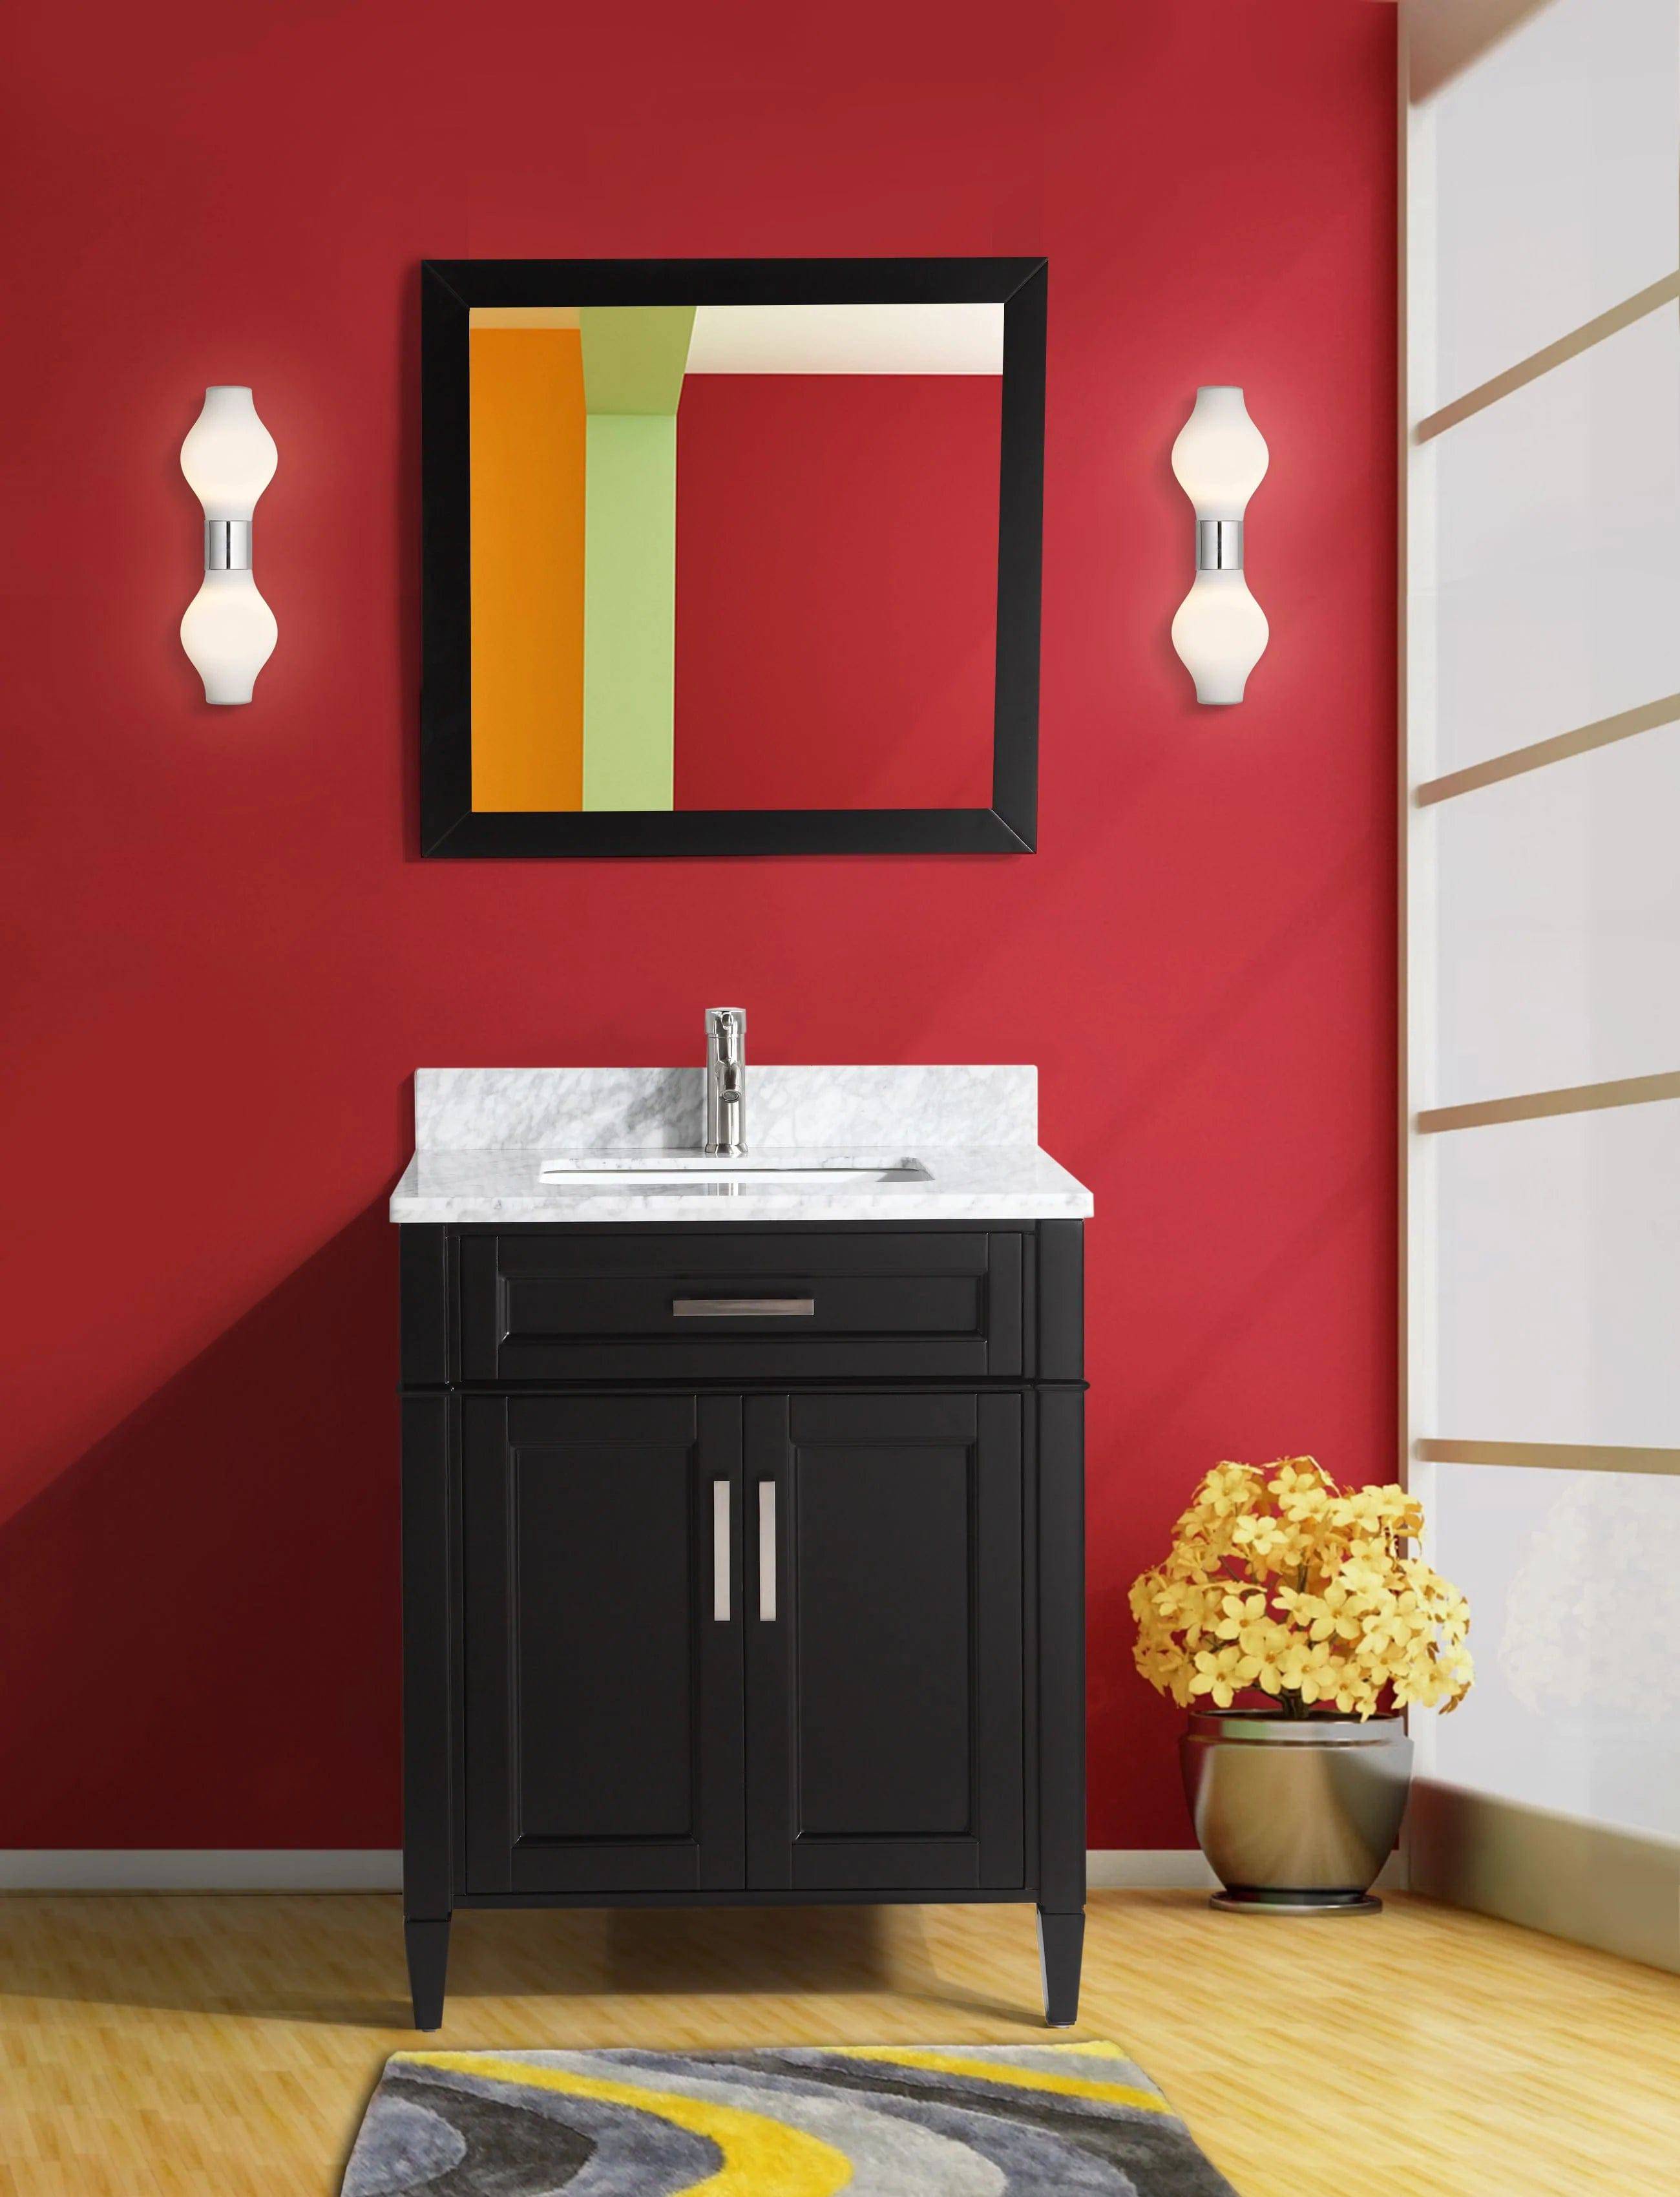 30 in. Single Sink Bathroom Vanity Set in Espresso,Carrara Marble Stone Top - Decohub Home